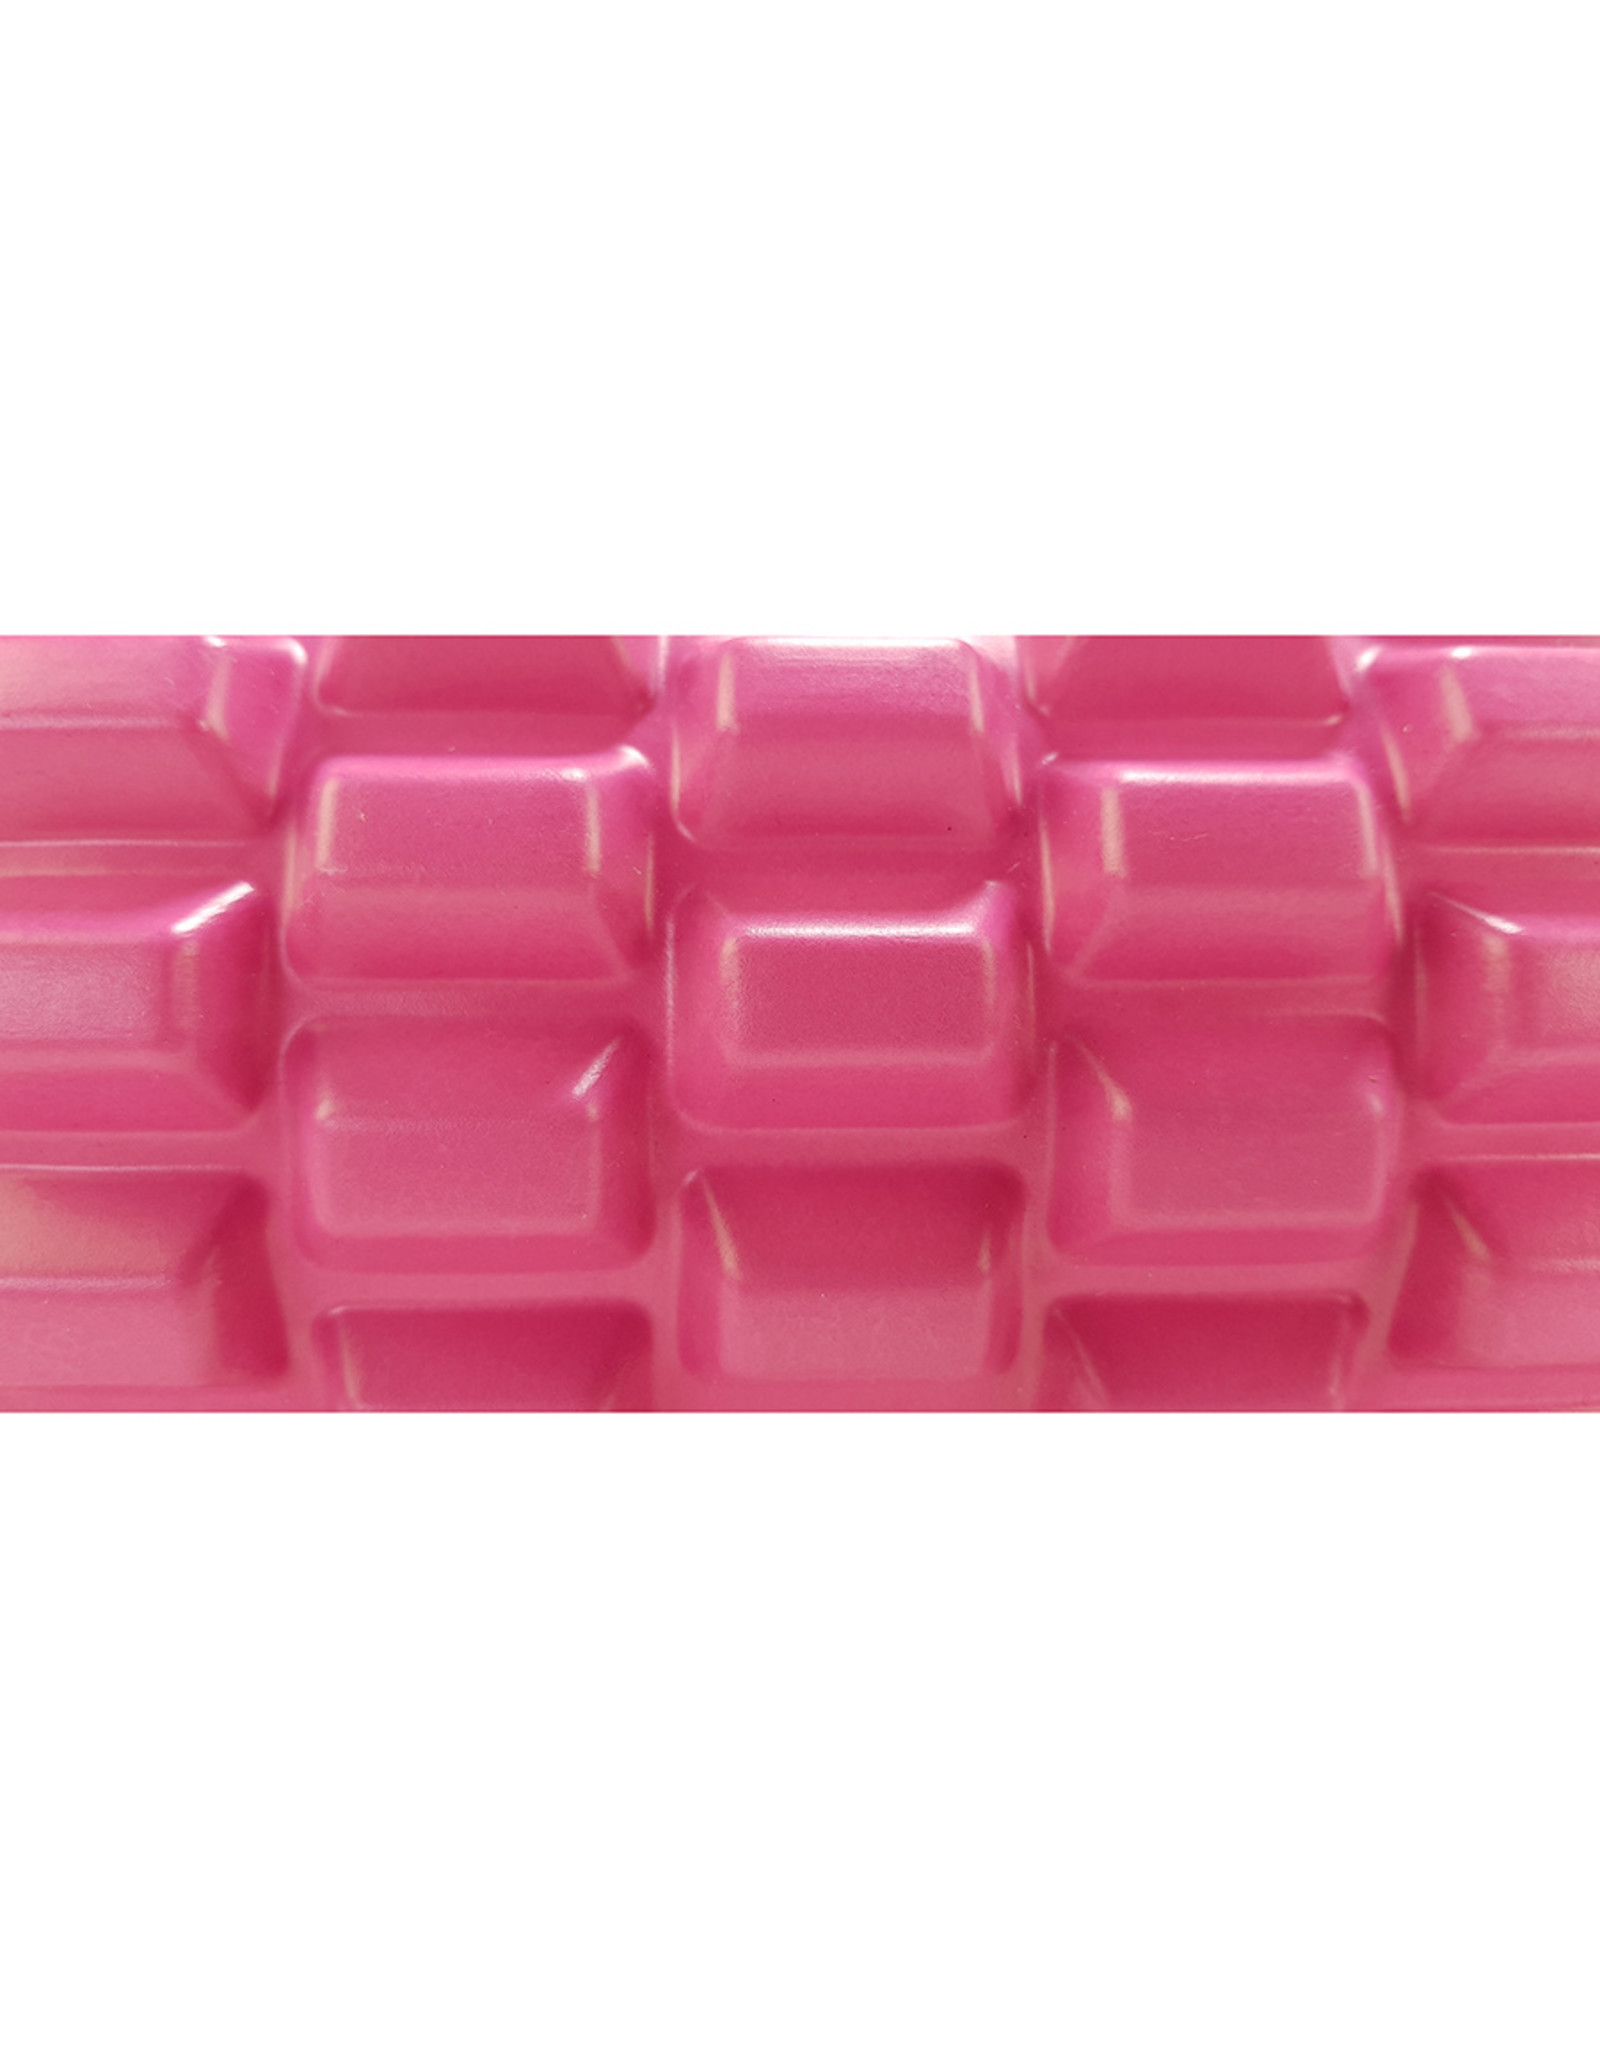 Tunturi Tunturi Yoga Foam Grid Roller, 33cm, Pink